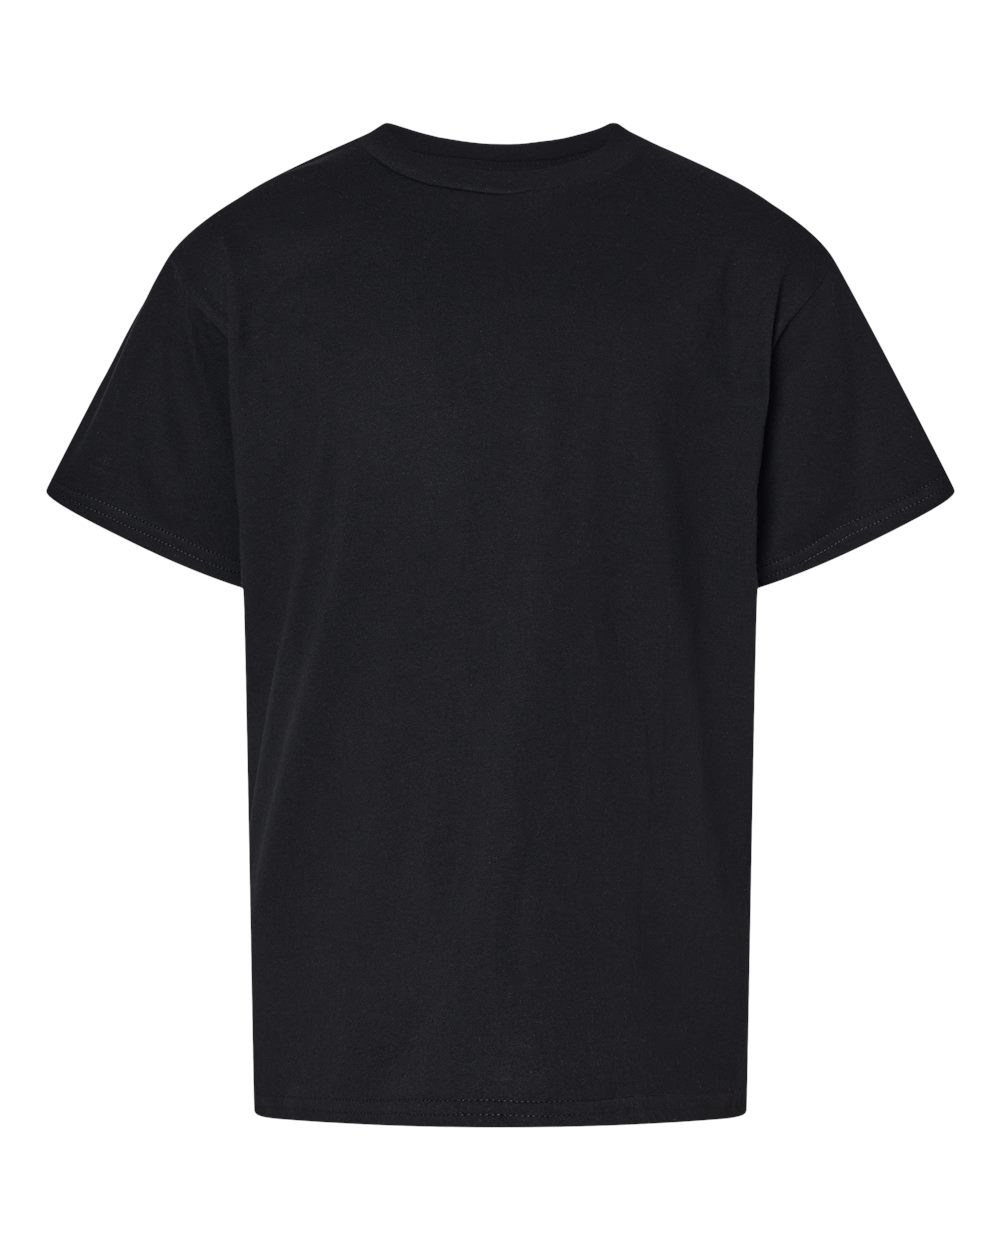 Gildan - Softstyle® Youth CVC T-Shirt - 67000B